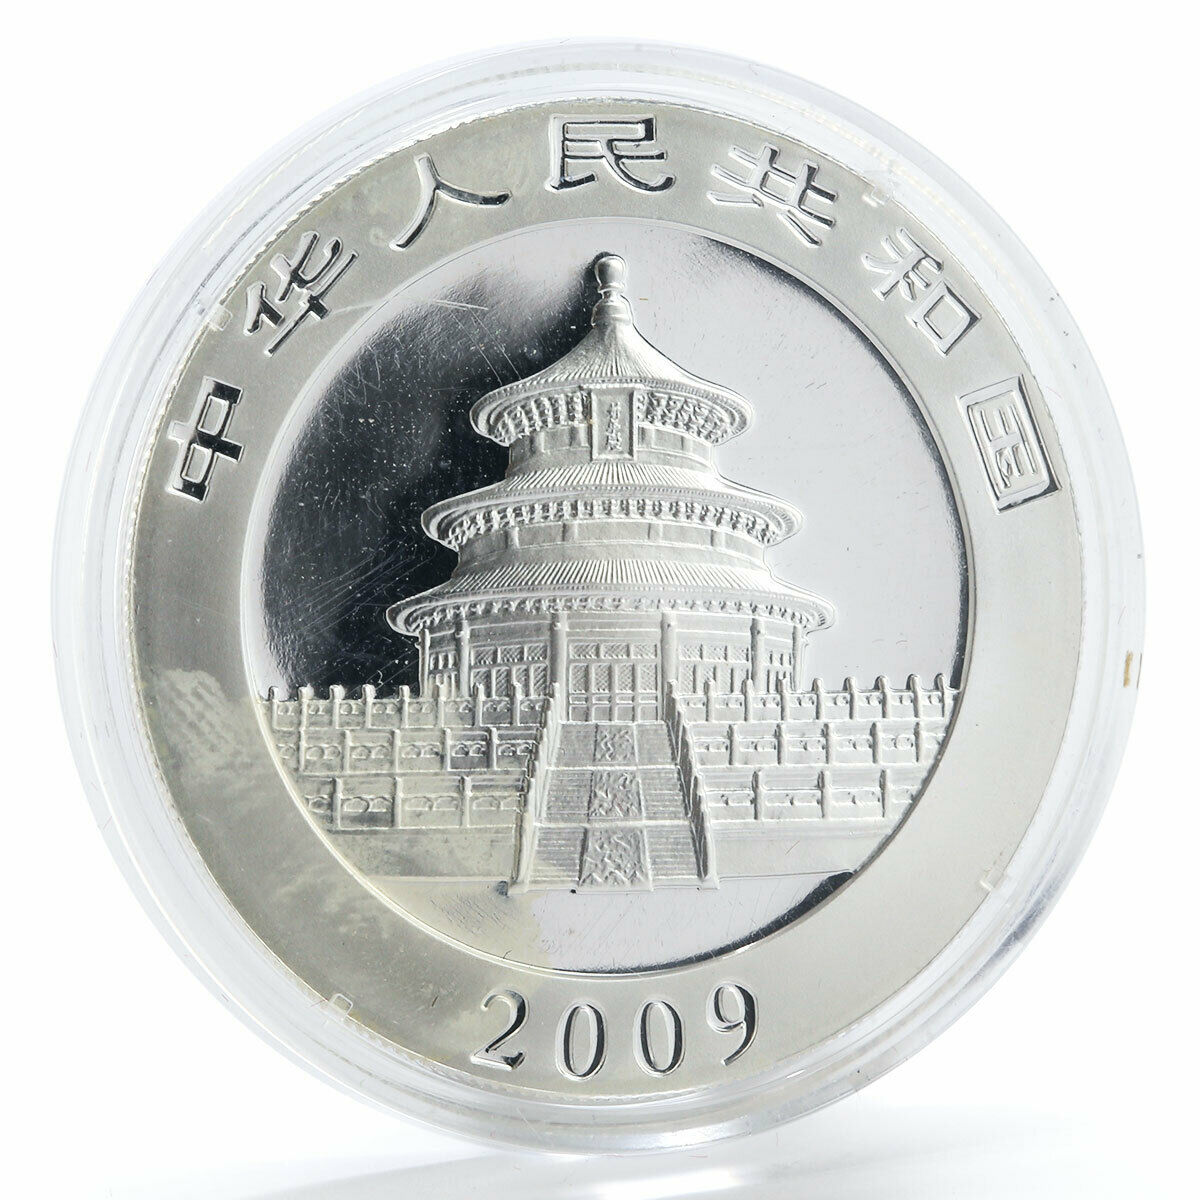 China 10 yuan Panda Series colorized silver coin 2009